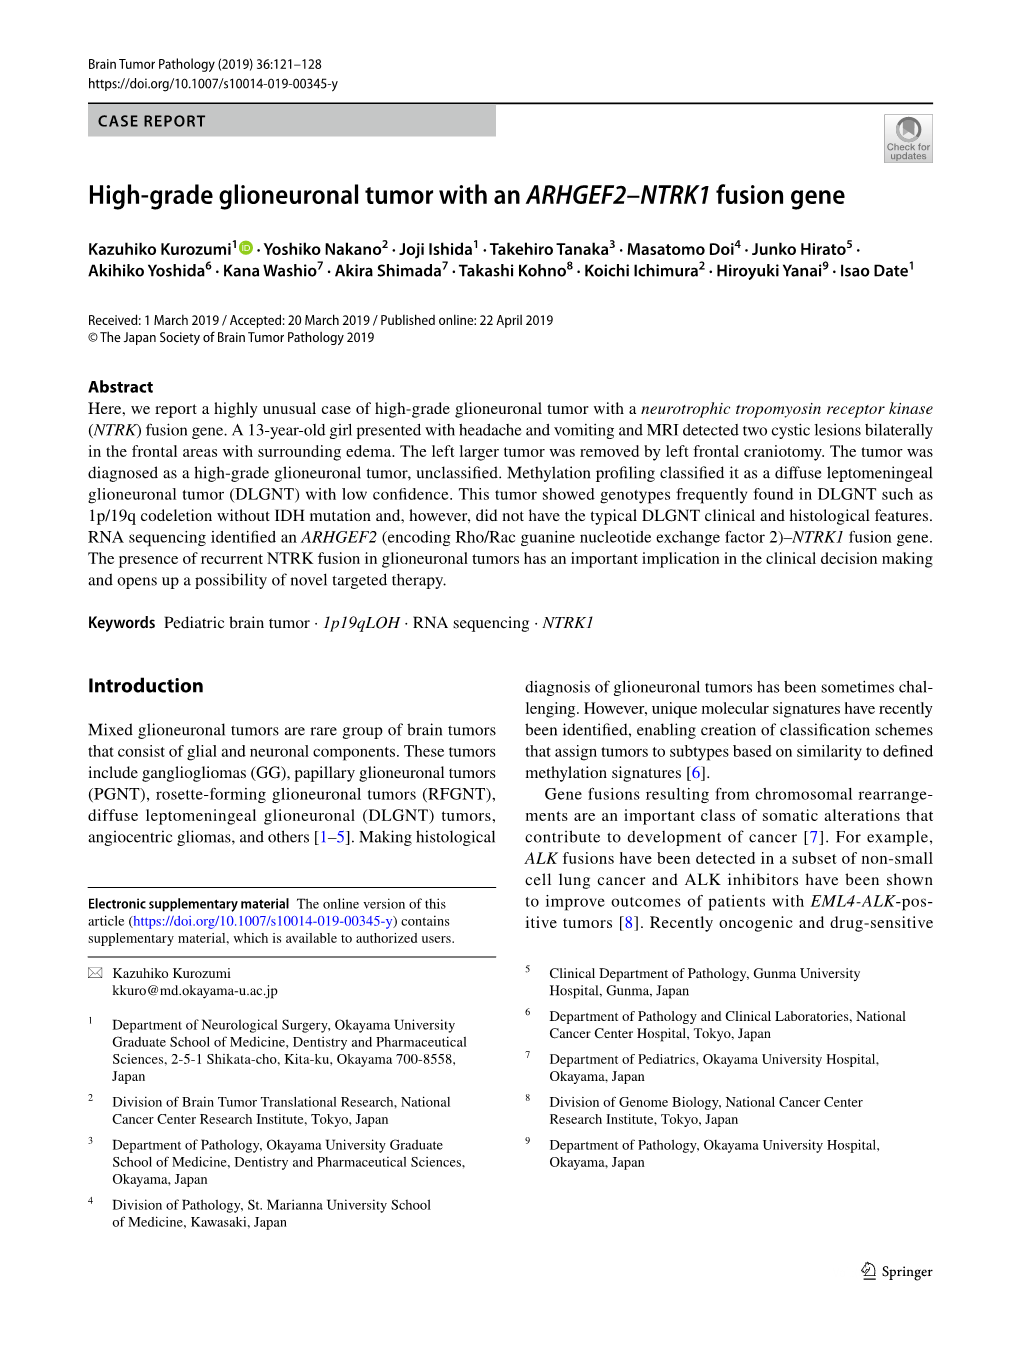 High-Grade Glioneuronal Tumor with an ARHGEF2–NTRK1 Fusion Gene